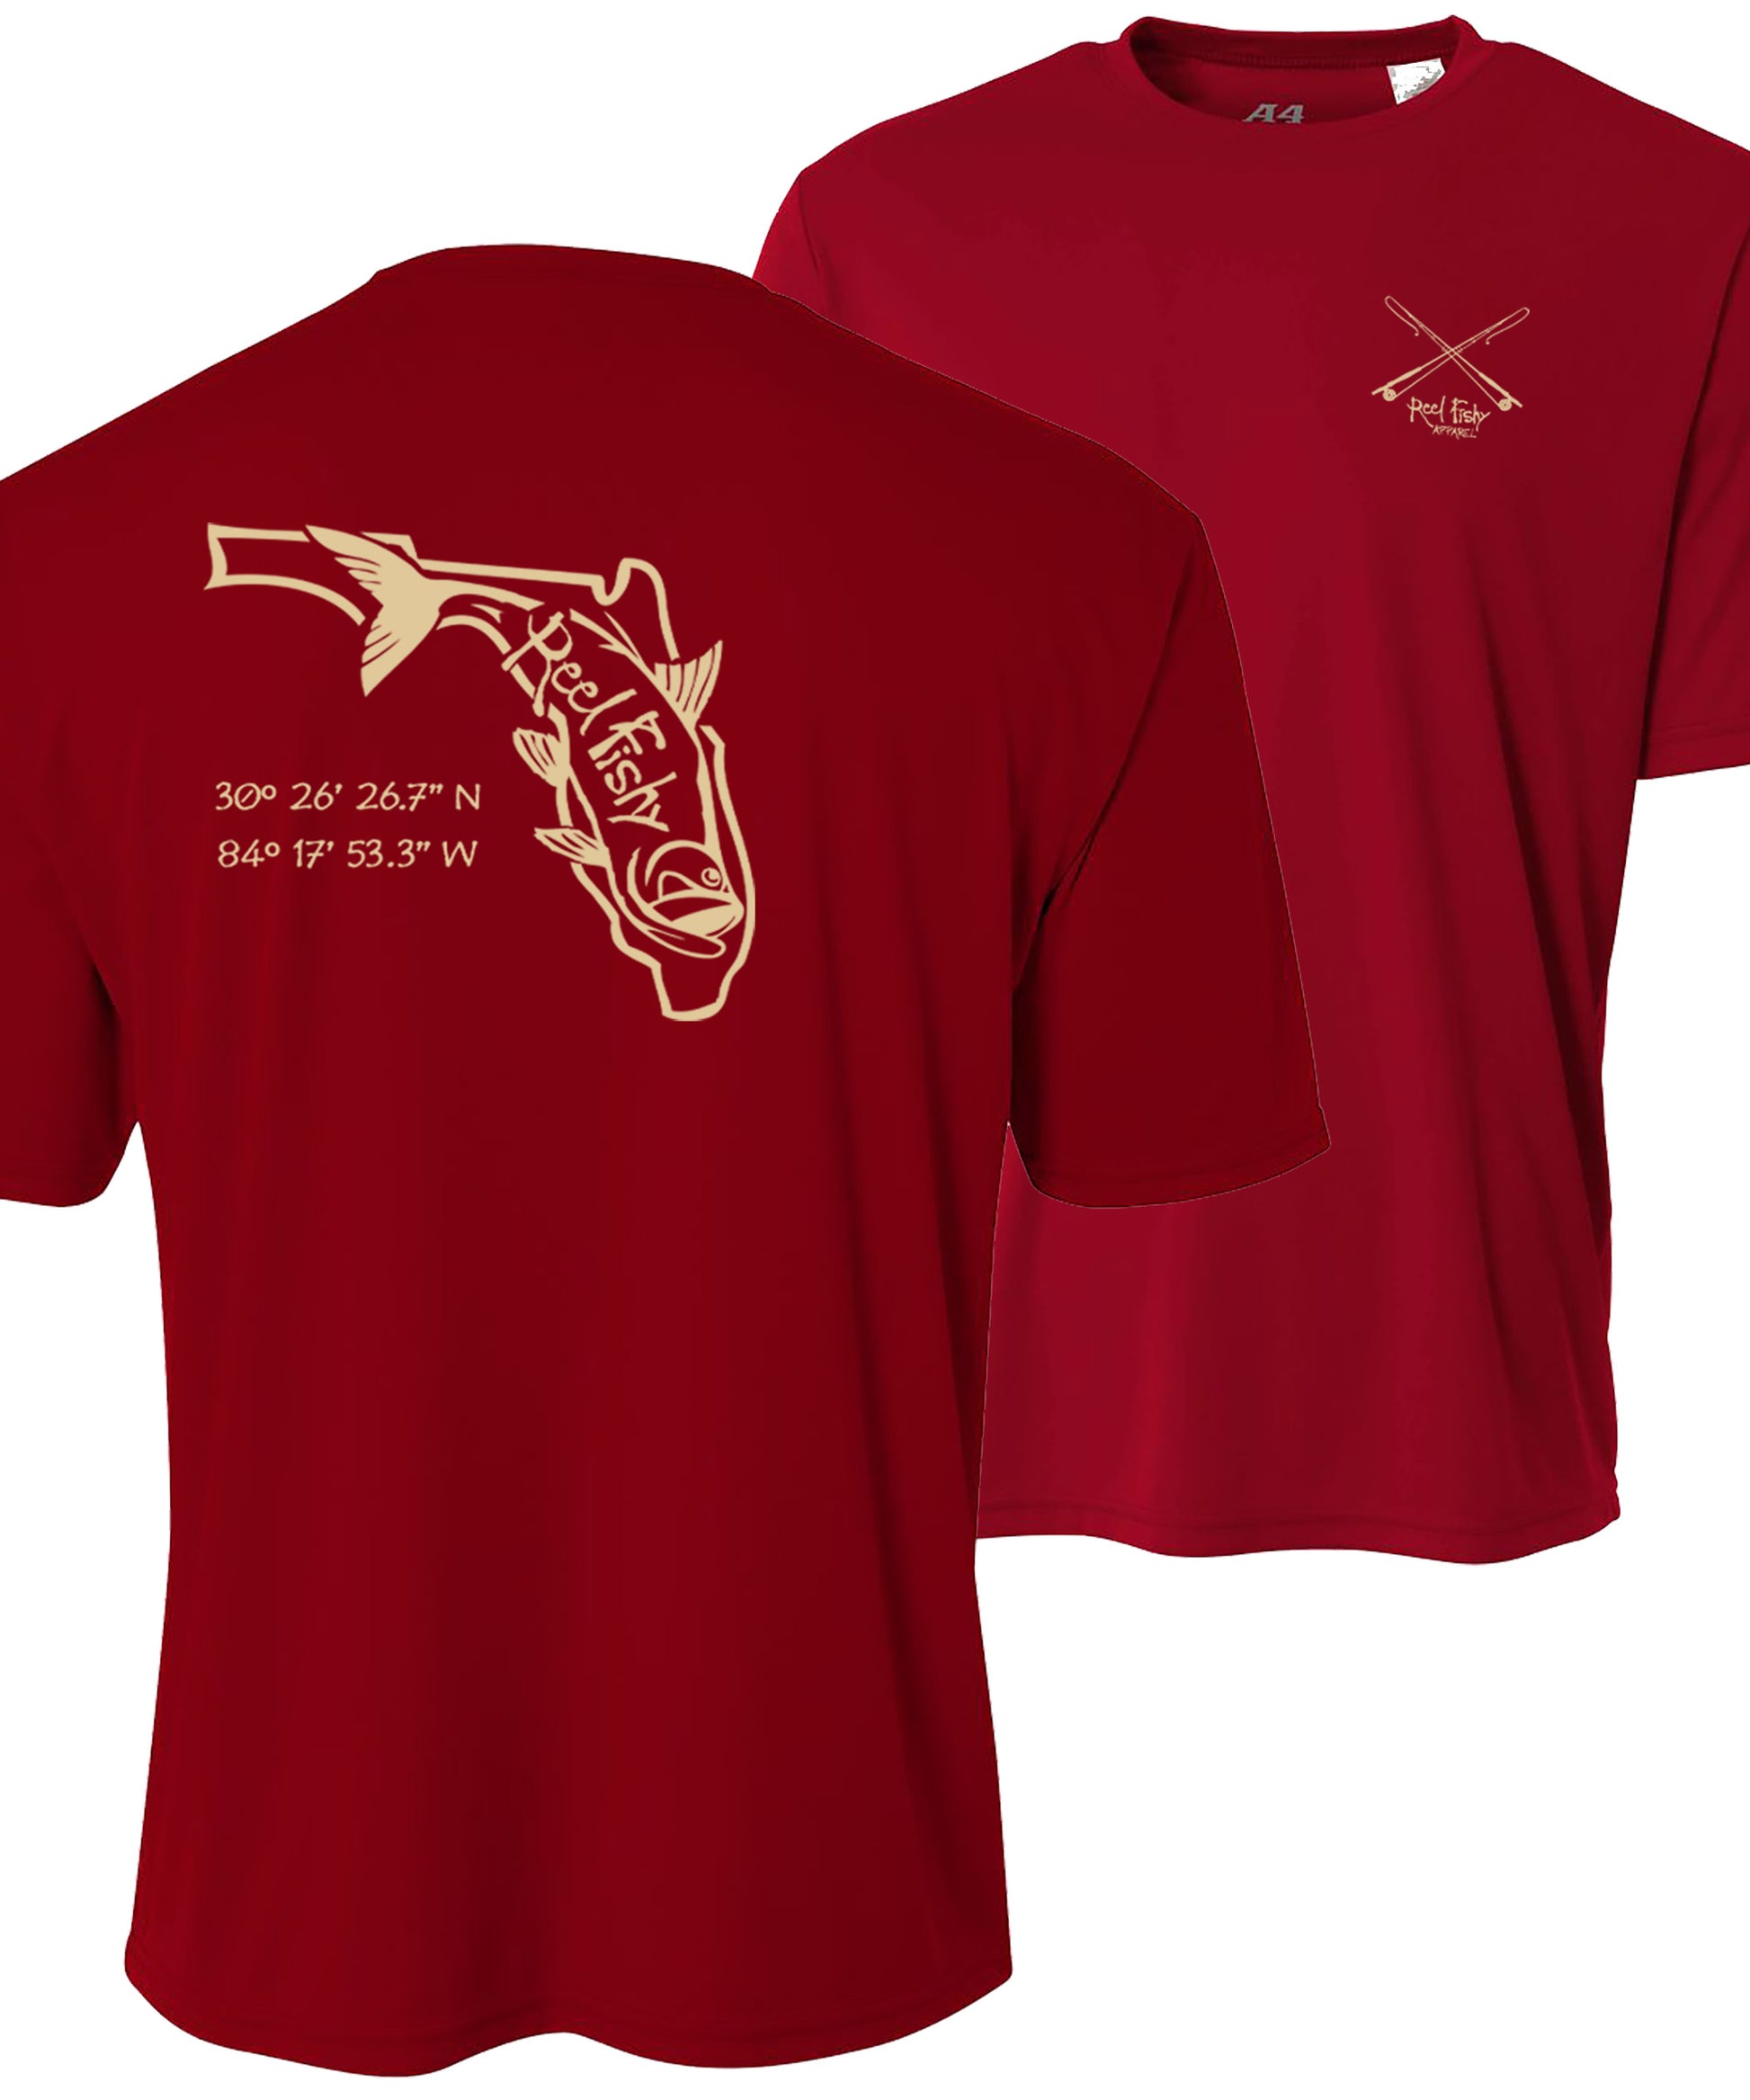 Cardinal/Gold Tarpon State of FL Team Performance Shirts 50+UV Sun Protection Short Sleeves